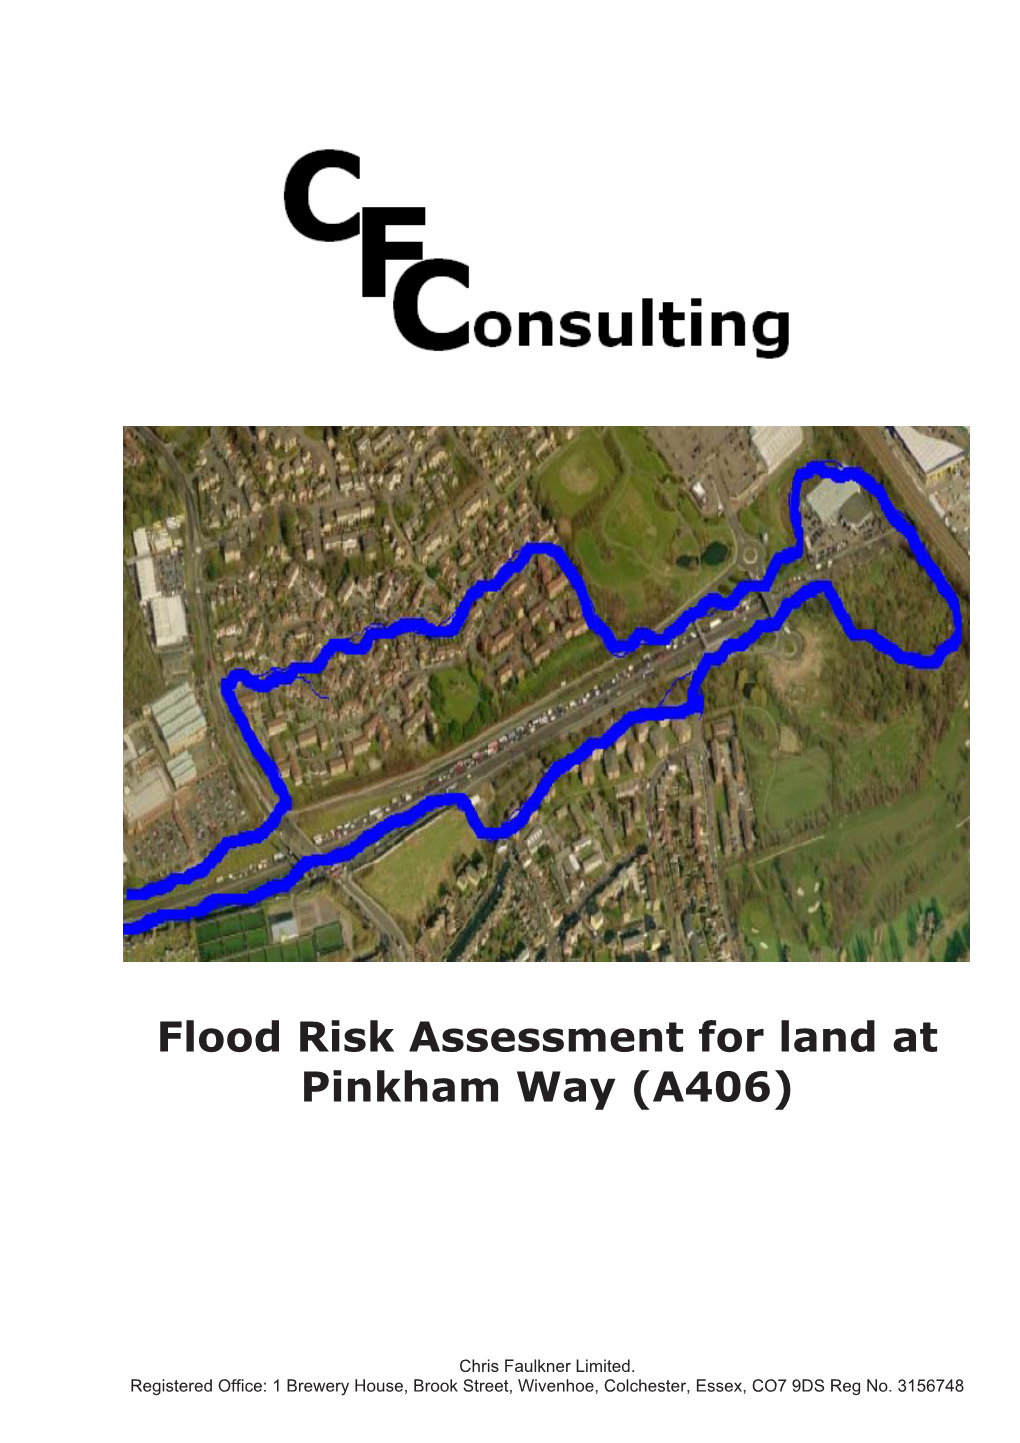 Flood Risk Assessment for Land at Pinkham Way (A406)